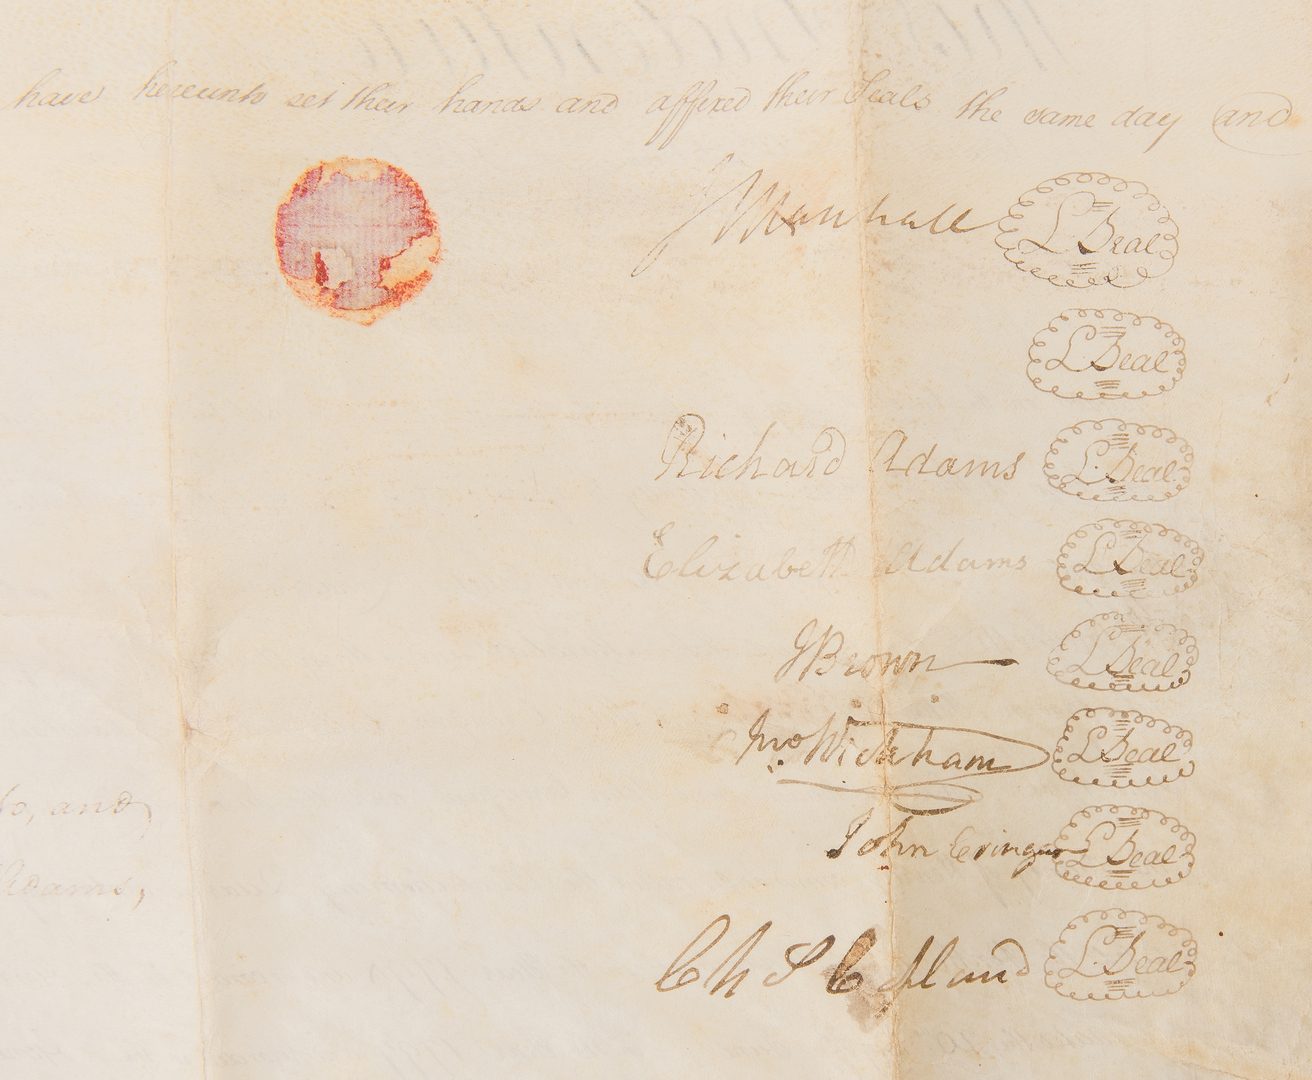 Lot 258: J. Marshall, R. Adams, J. Wickham Indenture, 1803